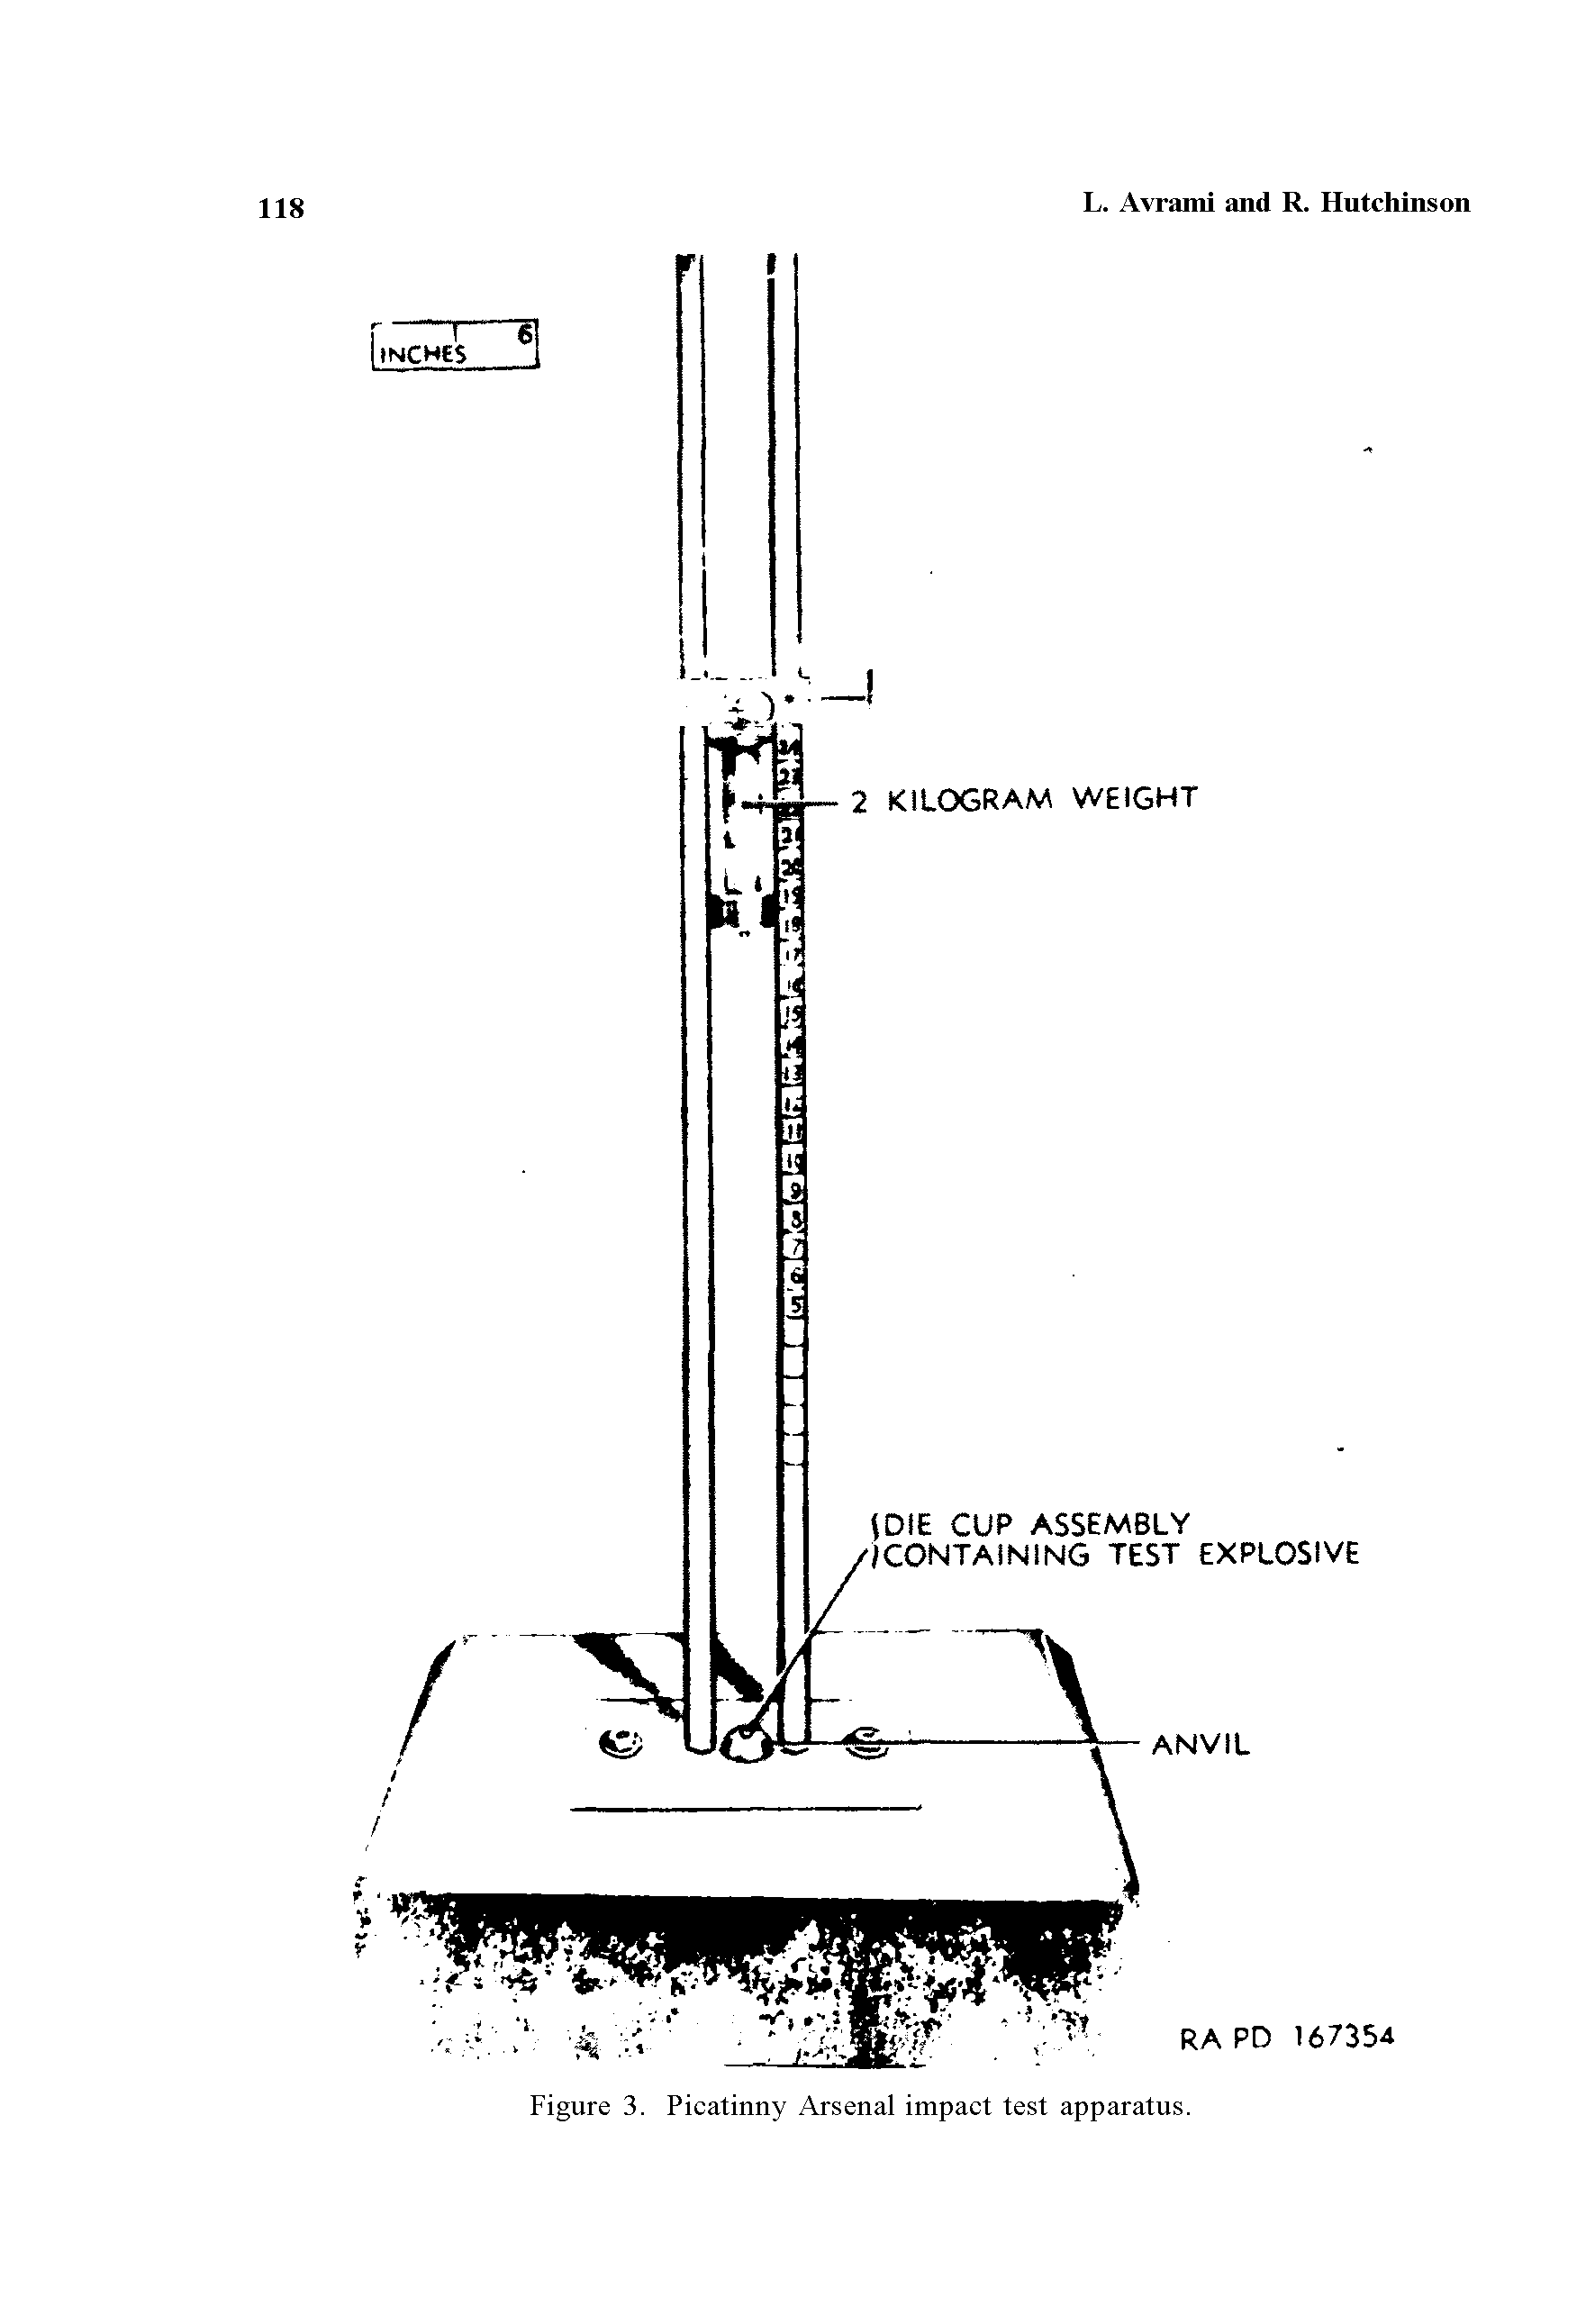 Figure 3. Picatinny Arsenal impact test apparatus.